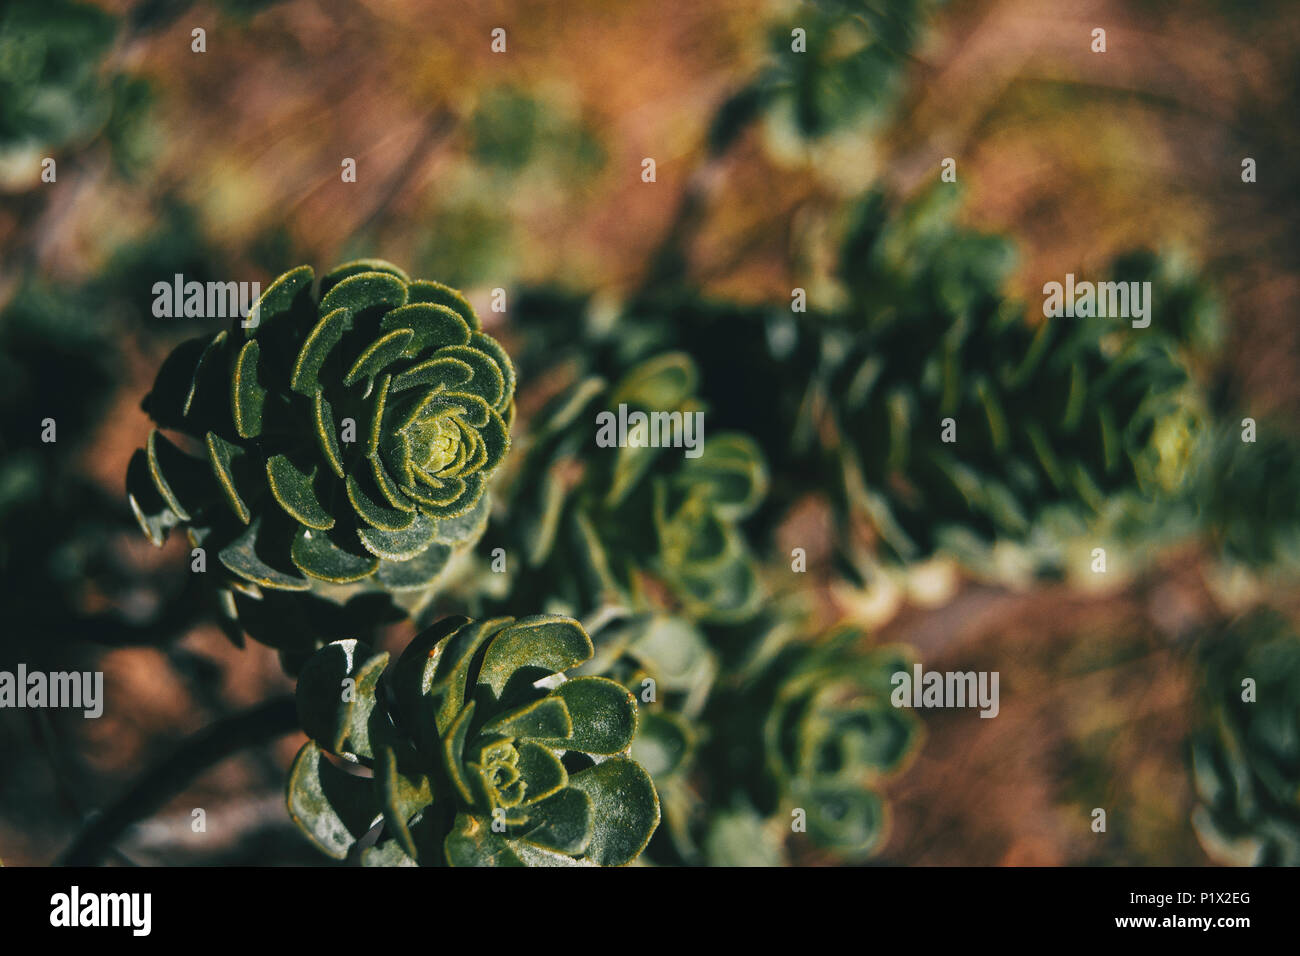 Succulent plants of aeonium spathulatum in the foreground Stock Photo